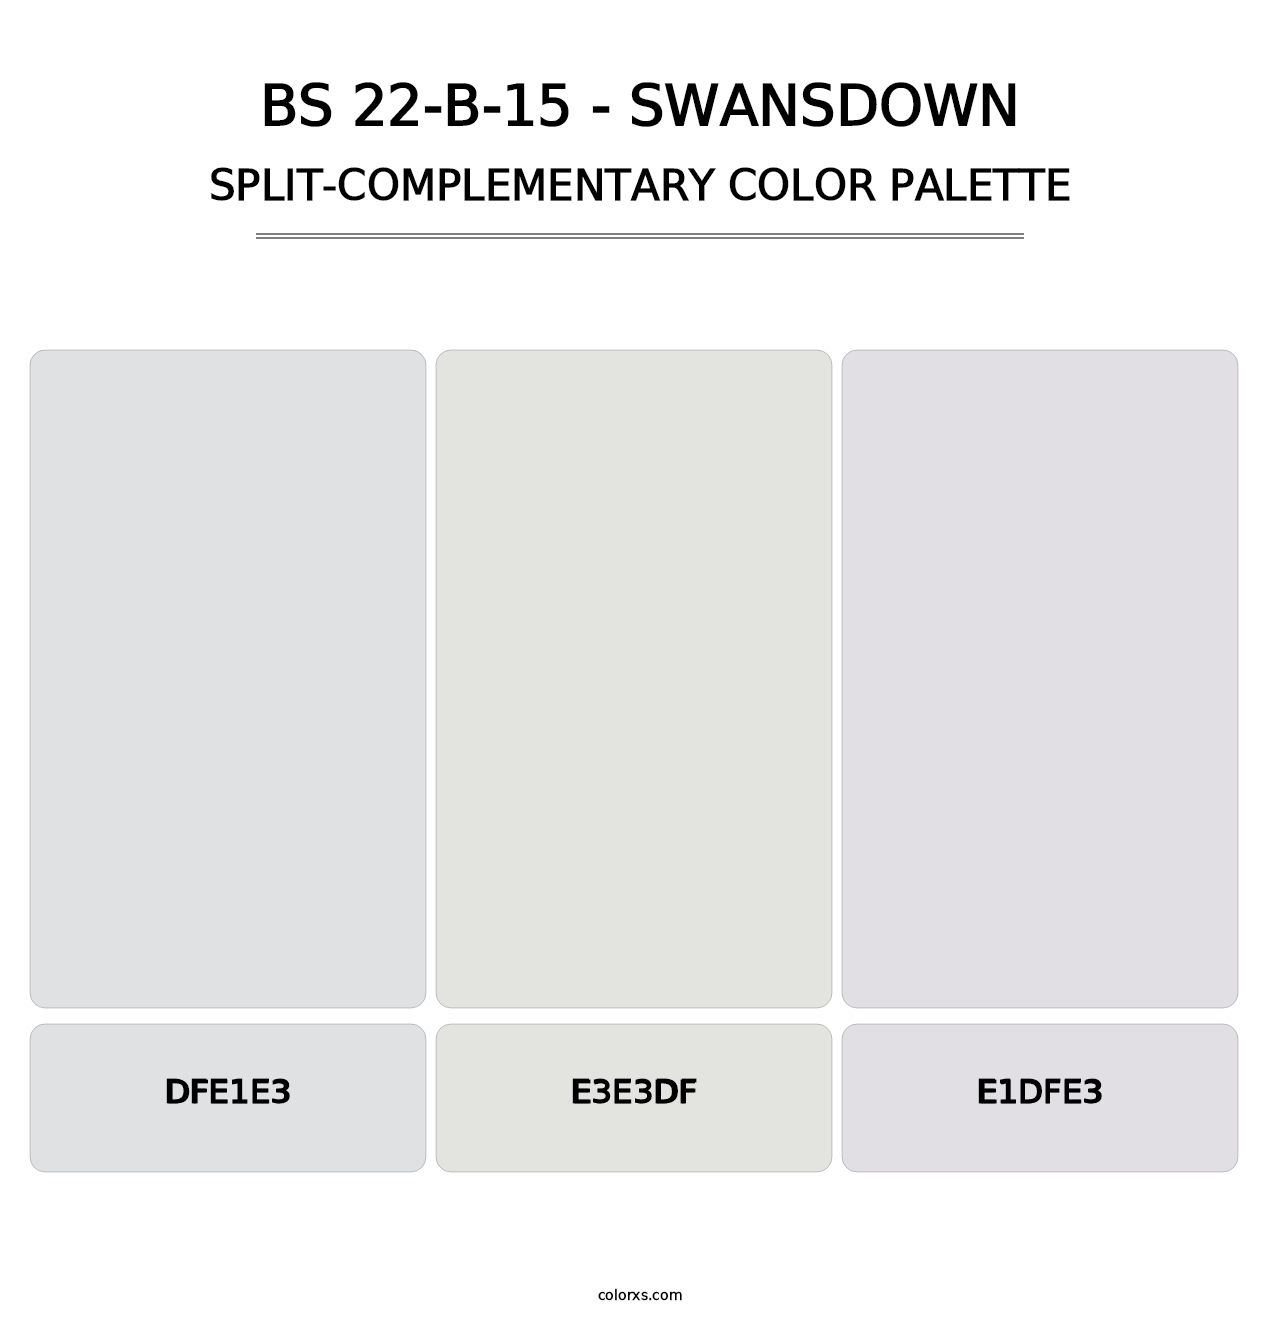 BS 22-B-15 - Swansdown - Split-Complementary Color Palette